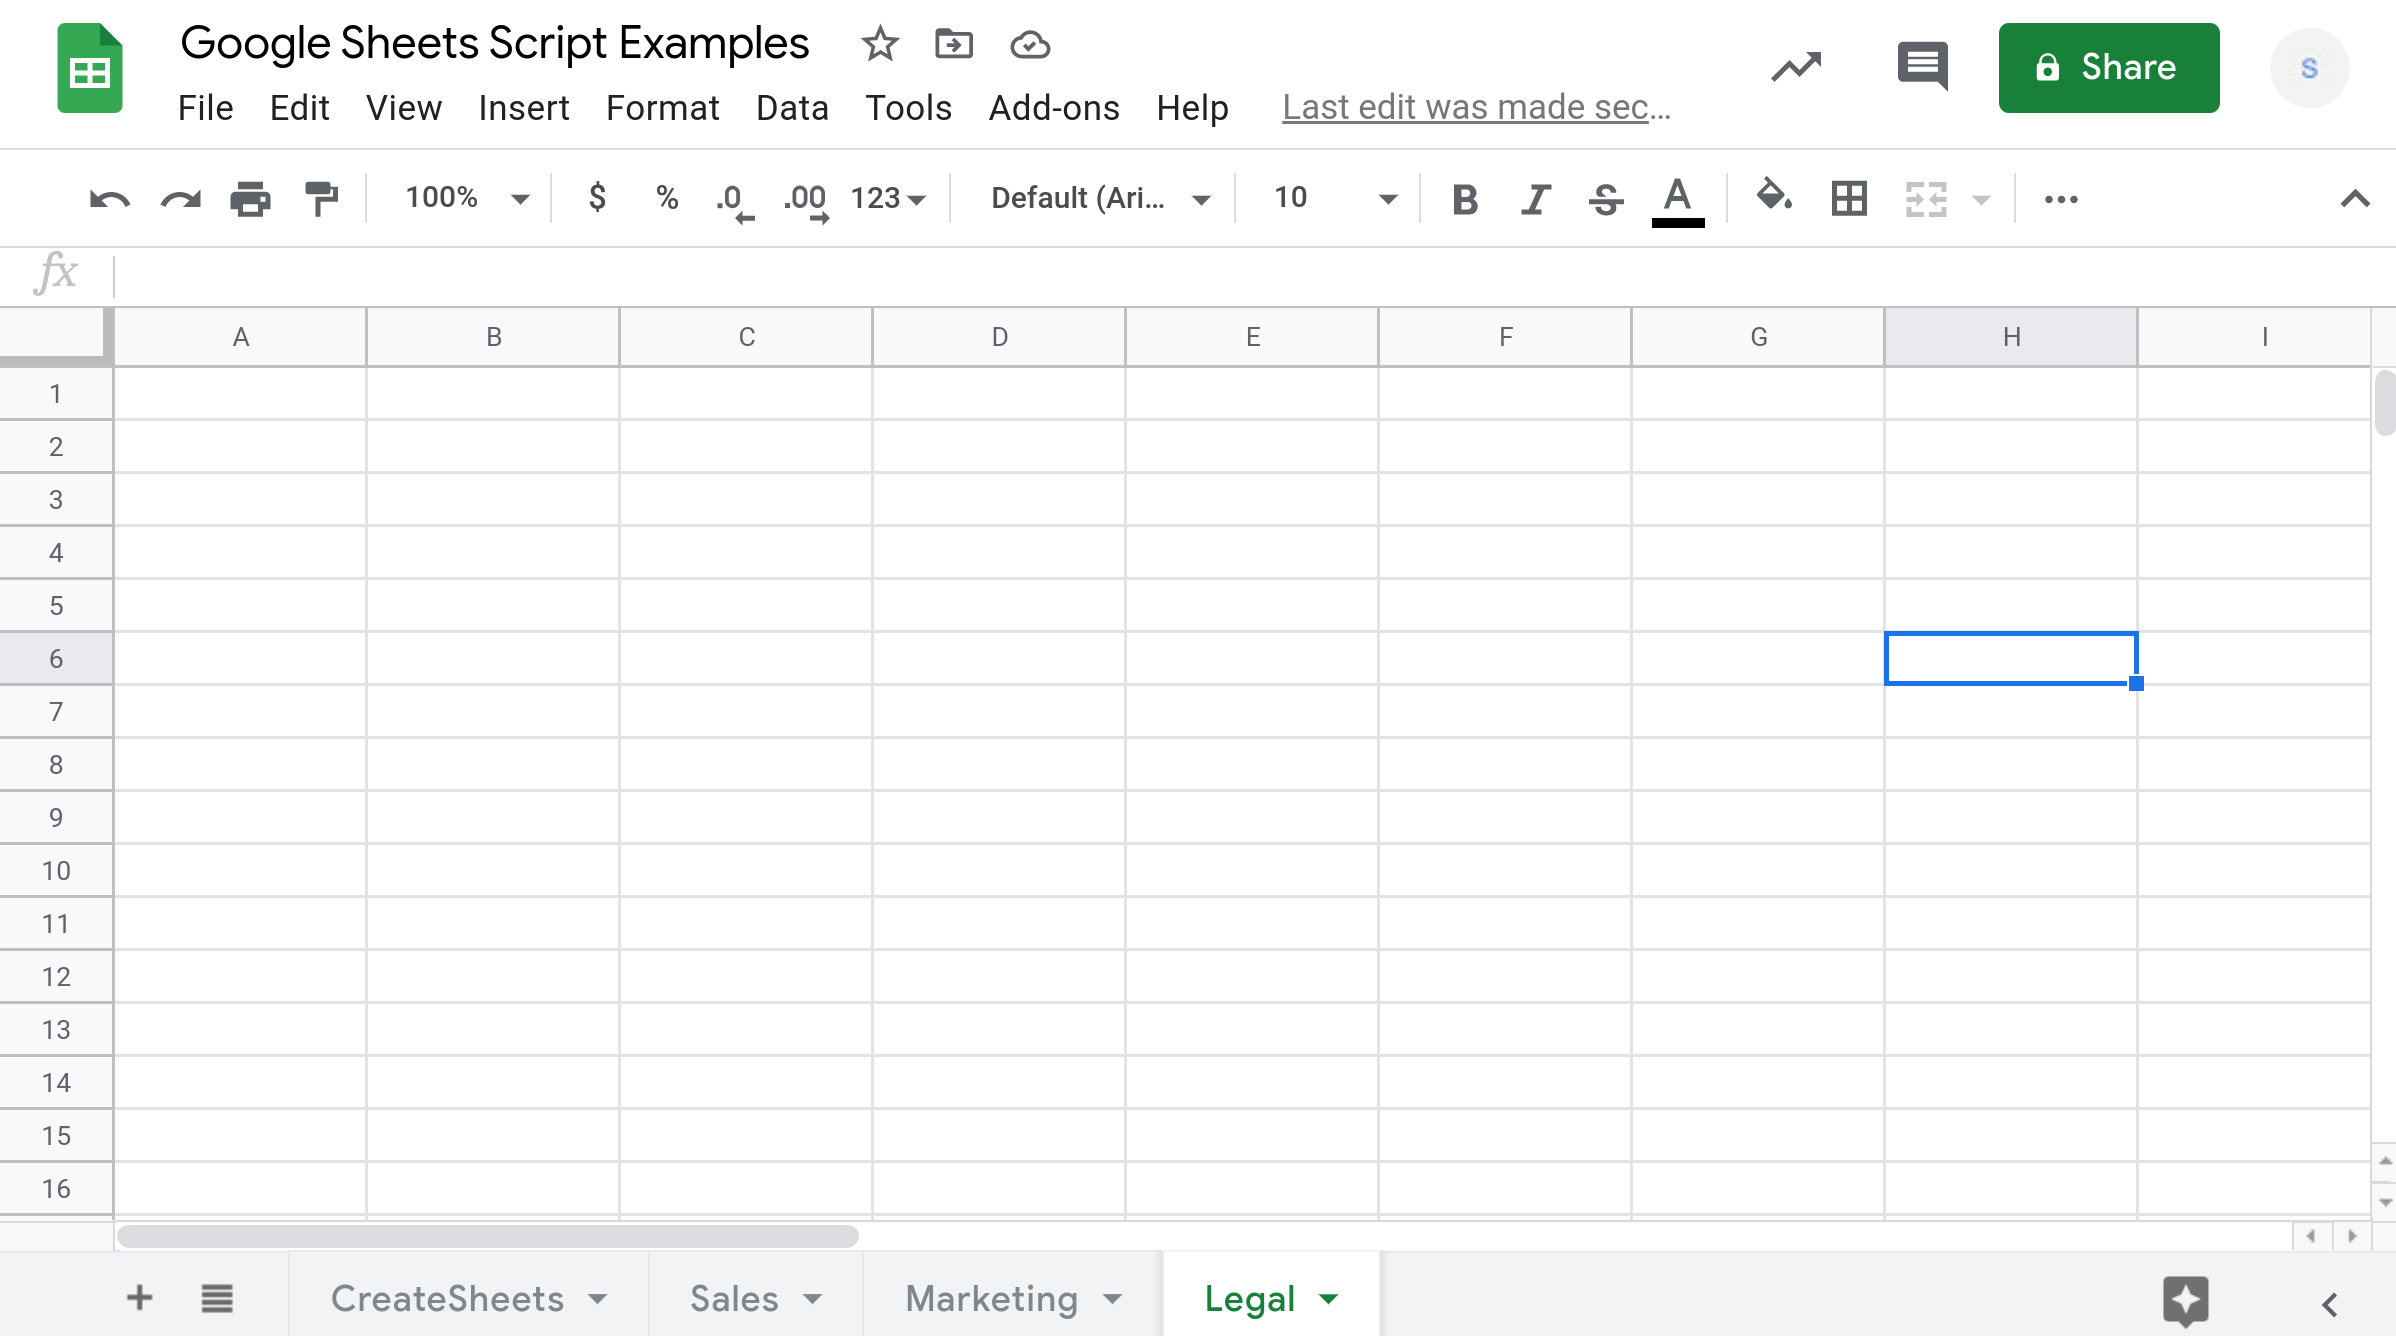 Screenshot of a Google Sheets spreadsheet.